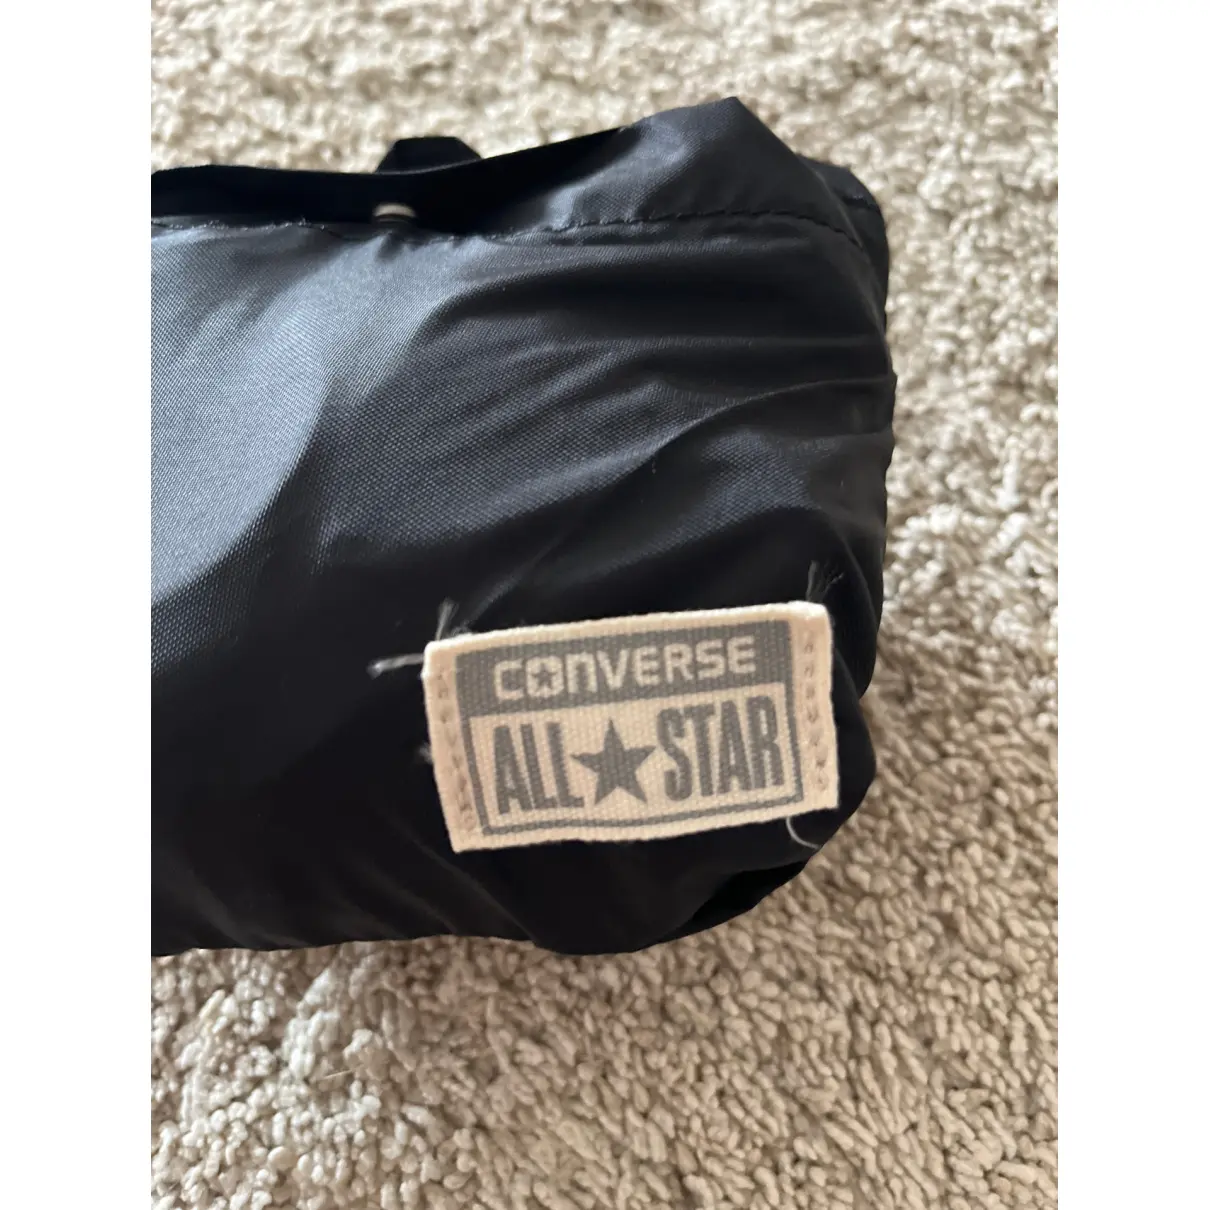 Cloth travel bag Converse